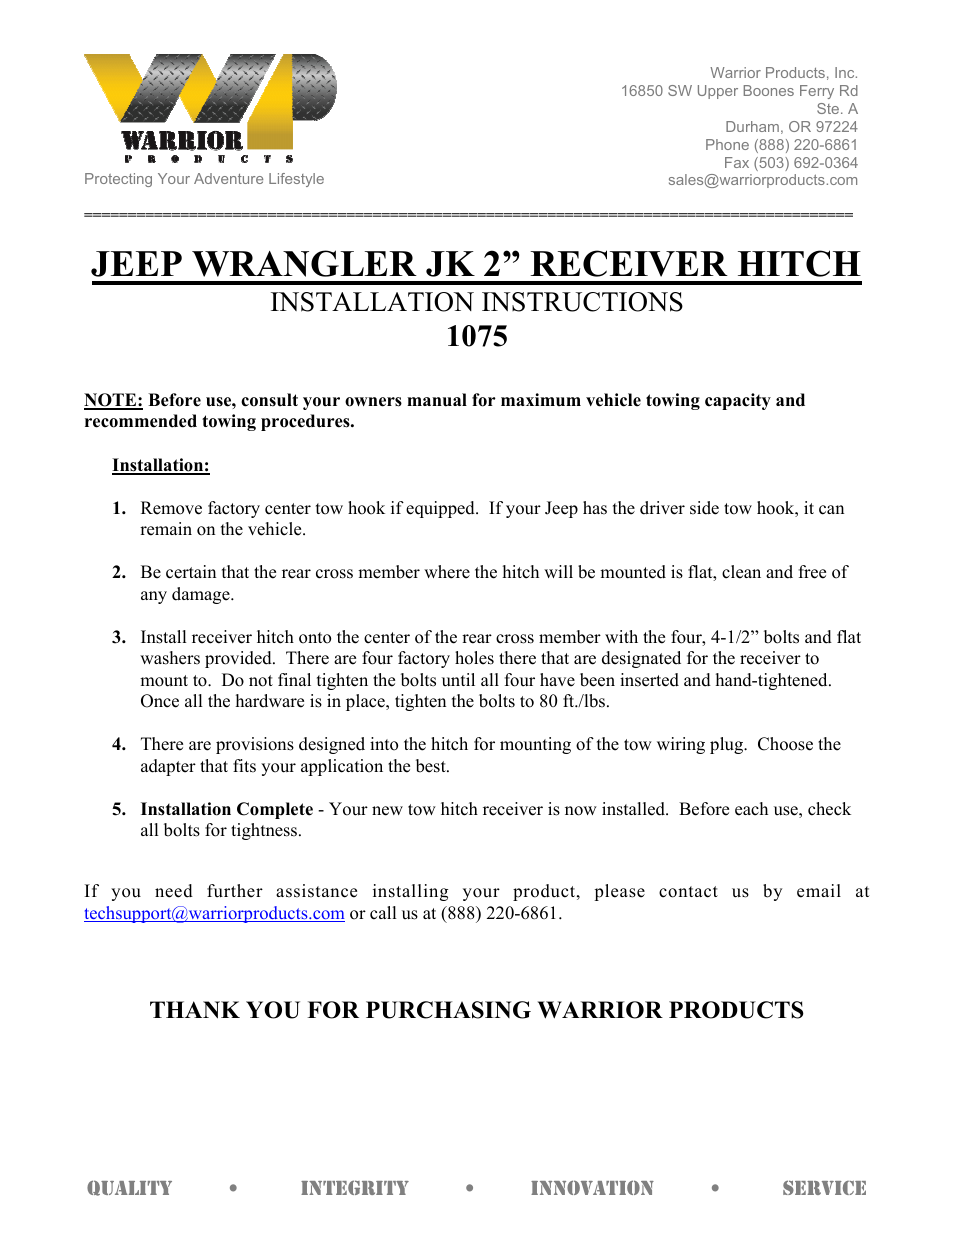 1075 RECEIVER HITCH (2007 – 2013 Jeep JK Wrangler)